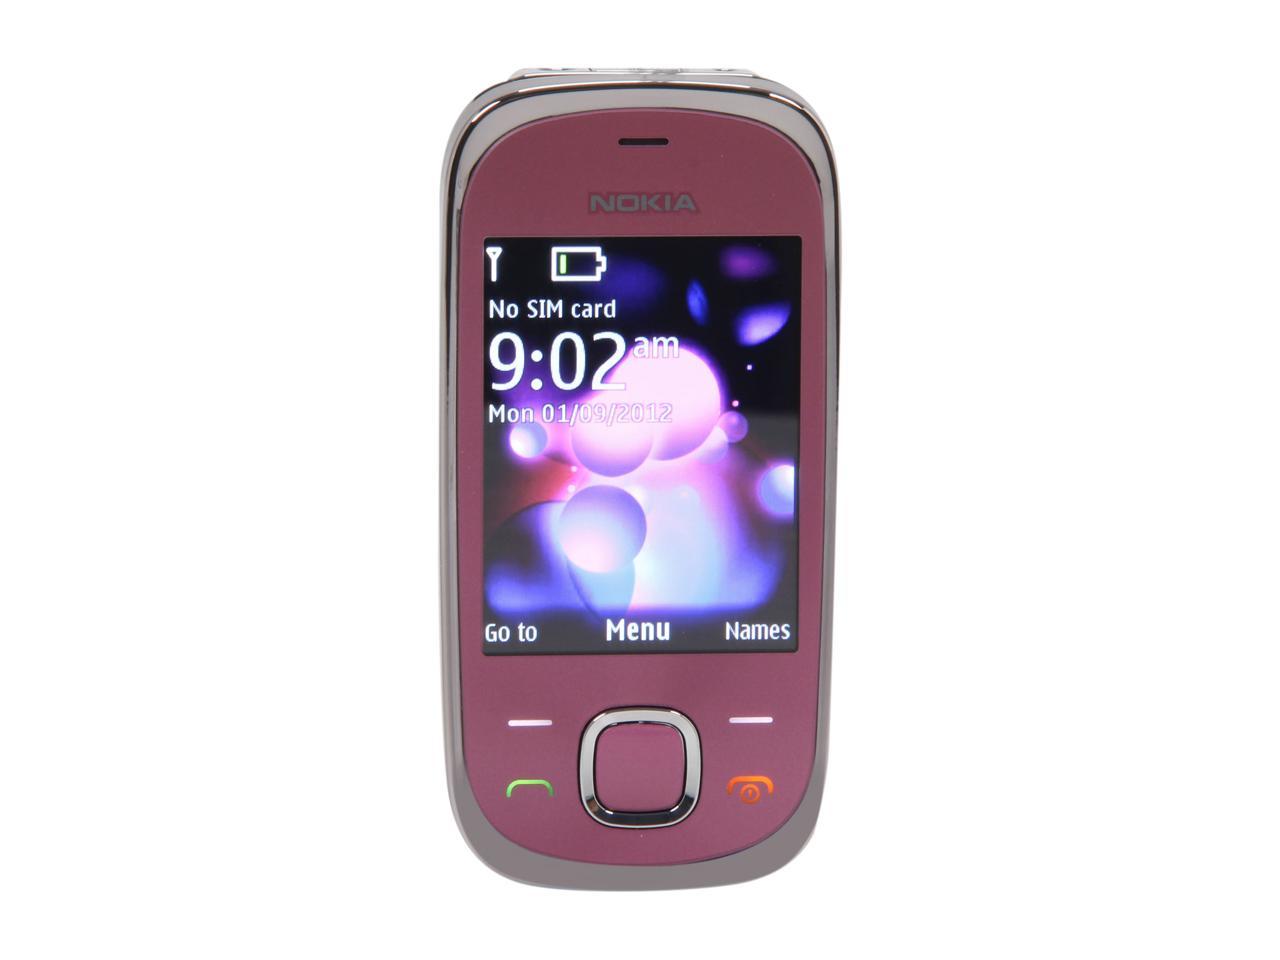 pink flip phone nokia